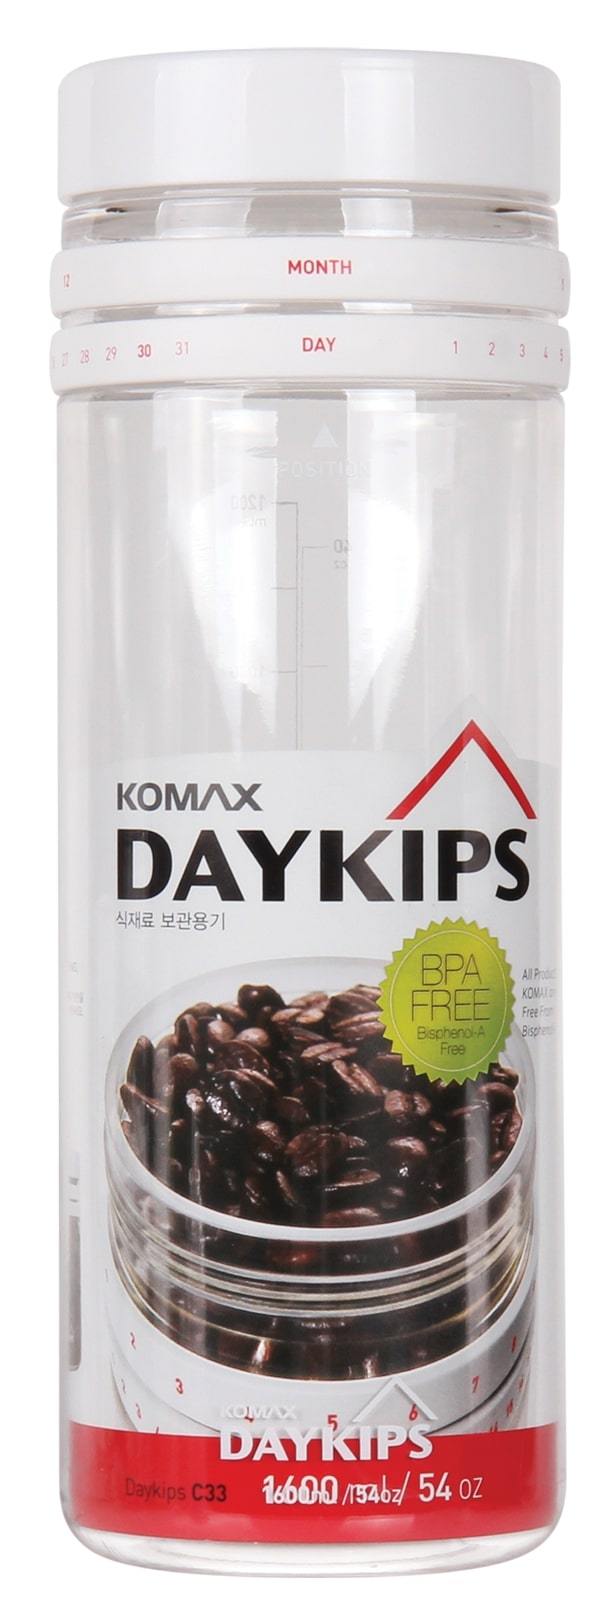 komax Komax Biokips Flour and Sugar Storage Containers